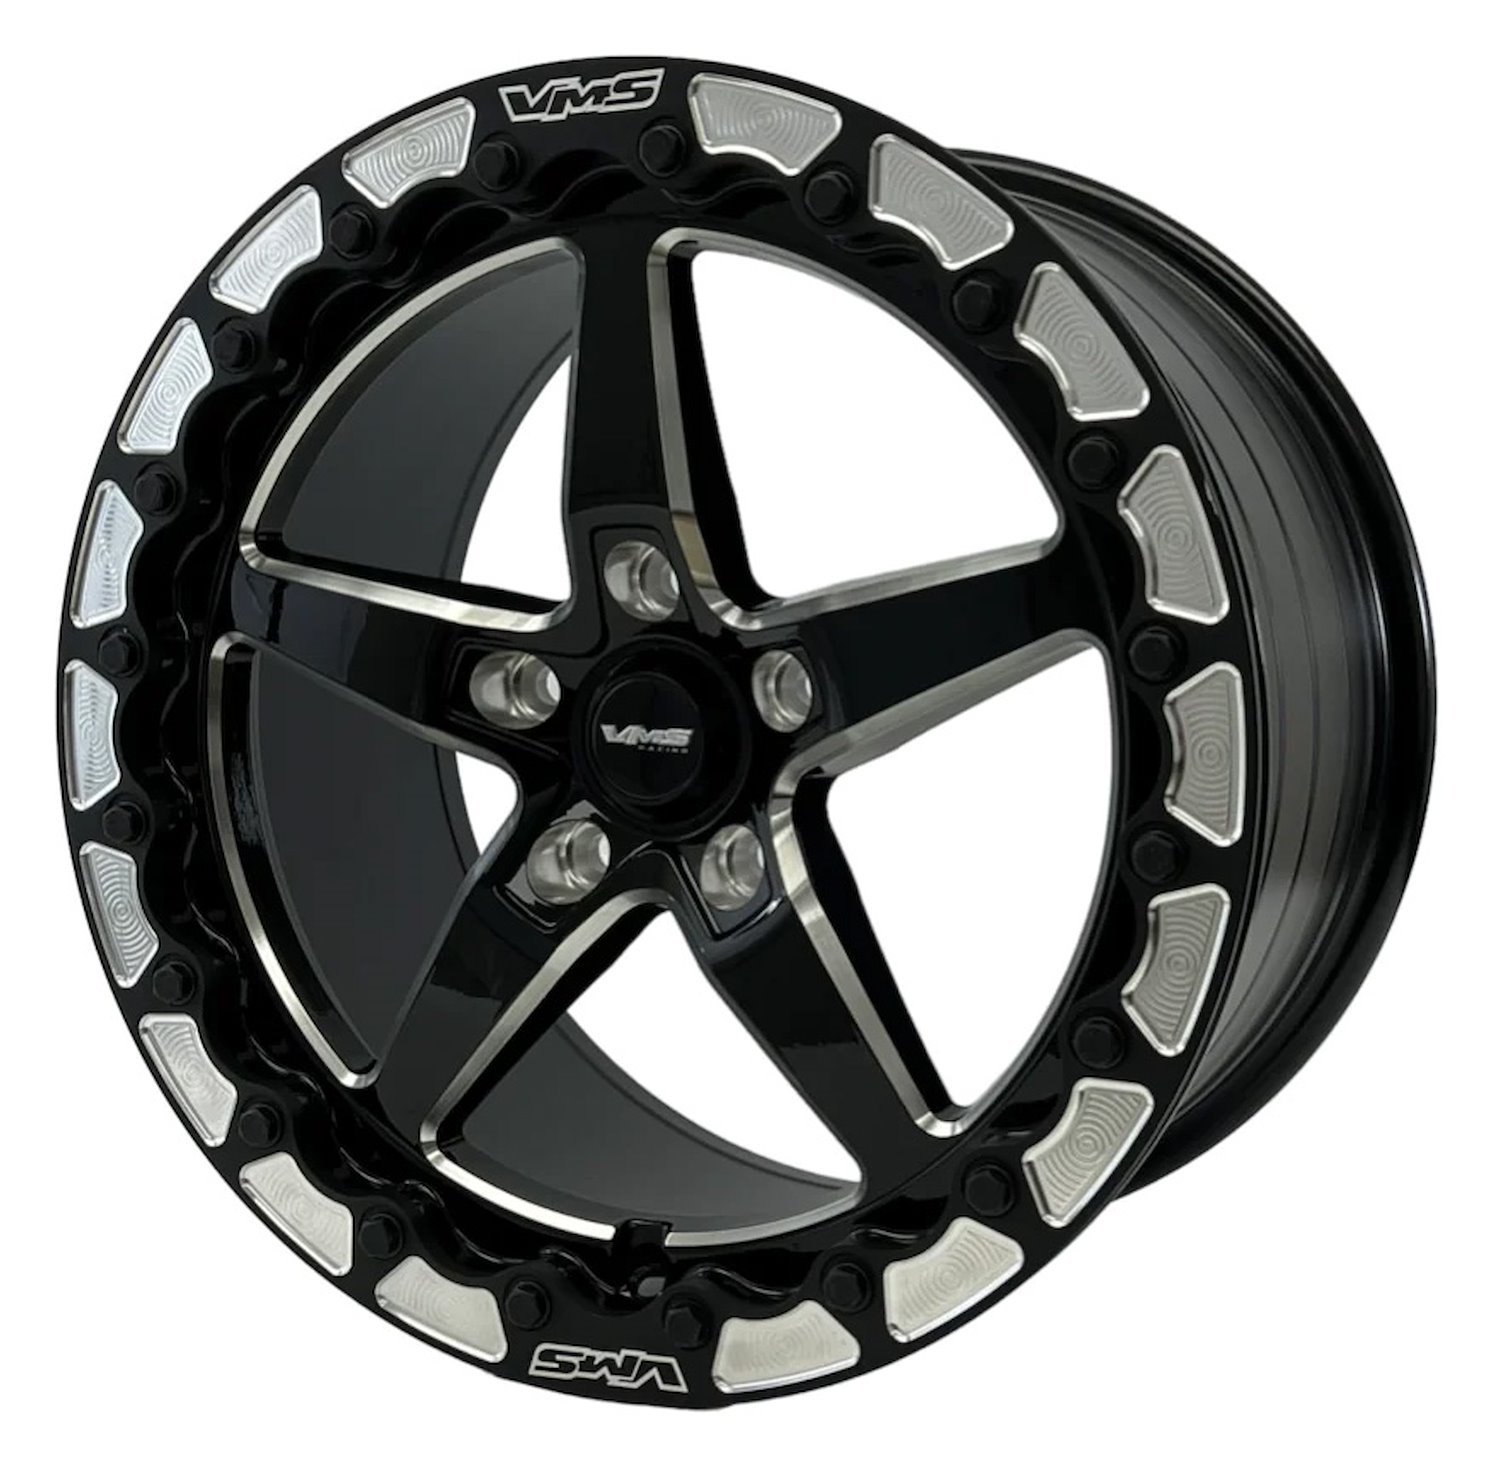 VWST082 V-Star Wheel, Size: 17" x 10", Bolt Pattern: 5 x 115 mm [Finish: Gloss Black Milled]